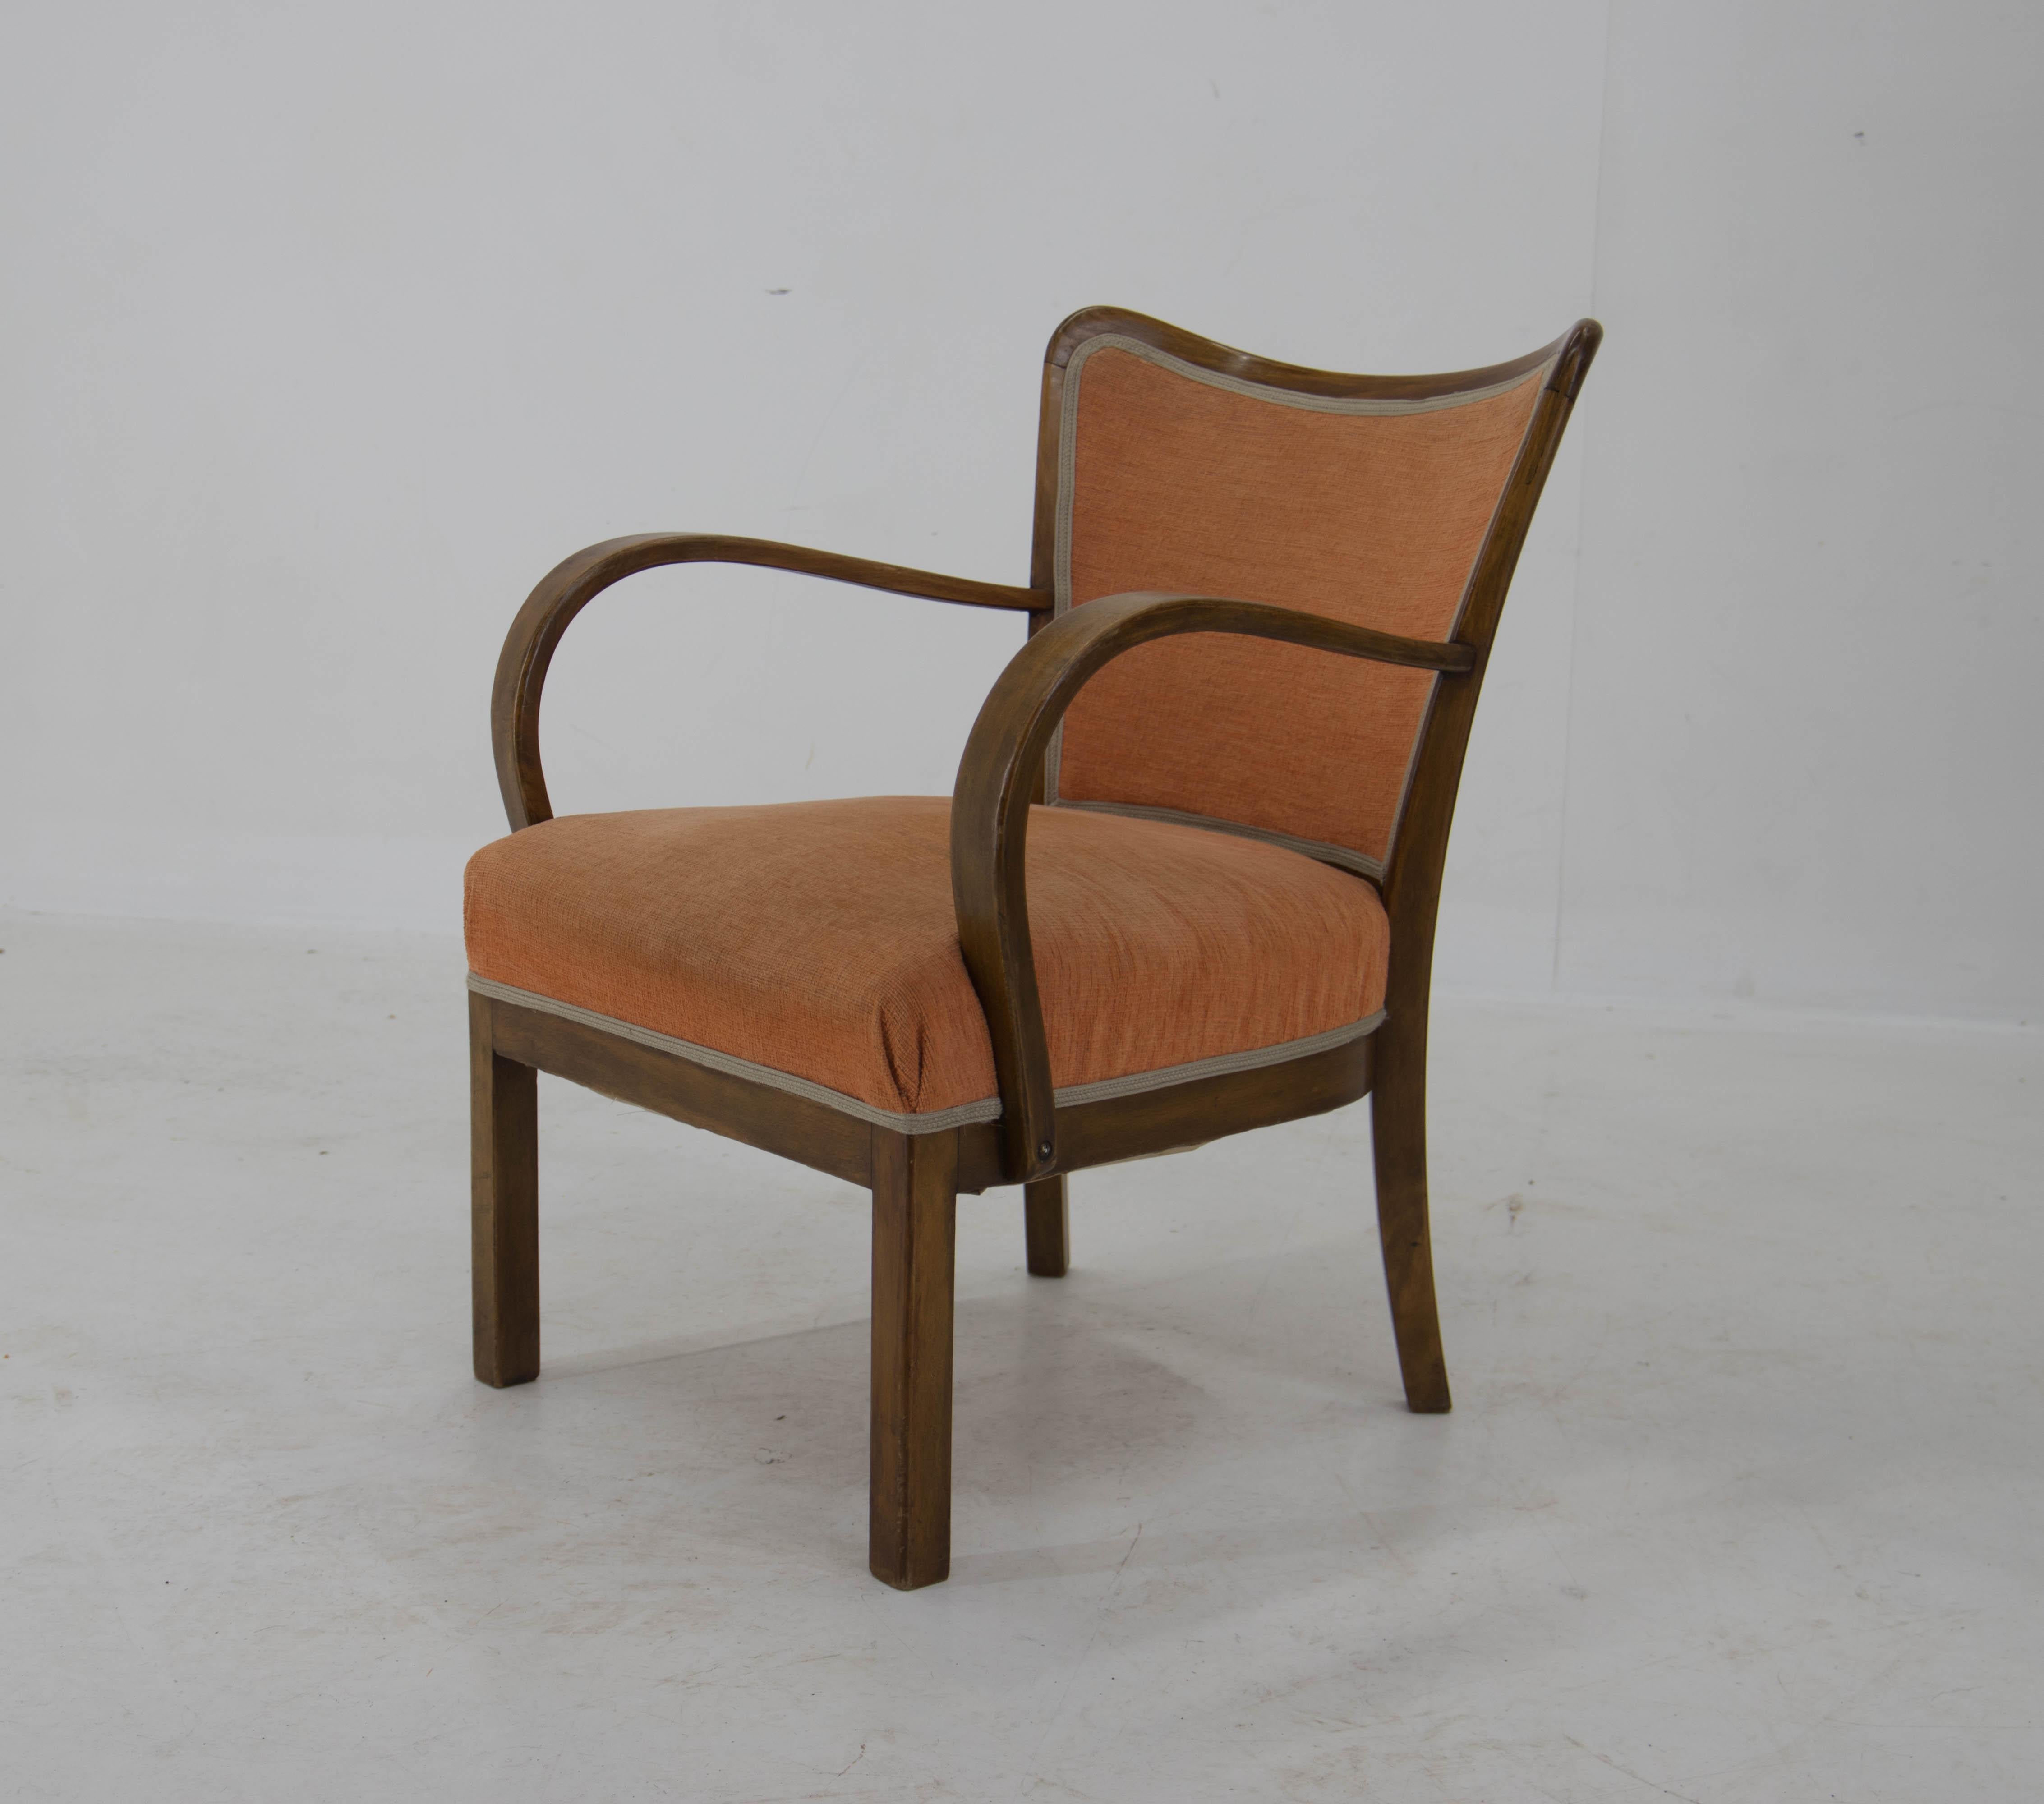 Elegant Art Deco armchair.
Very good original condition.